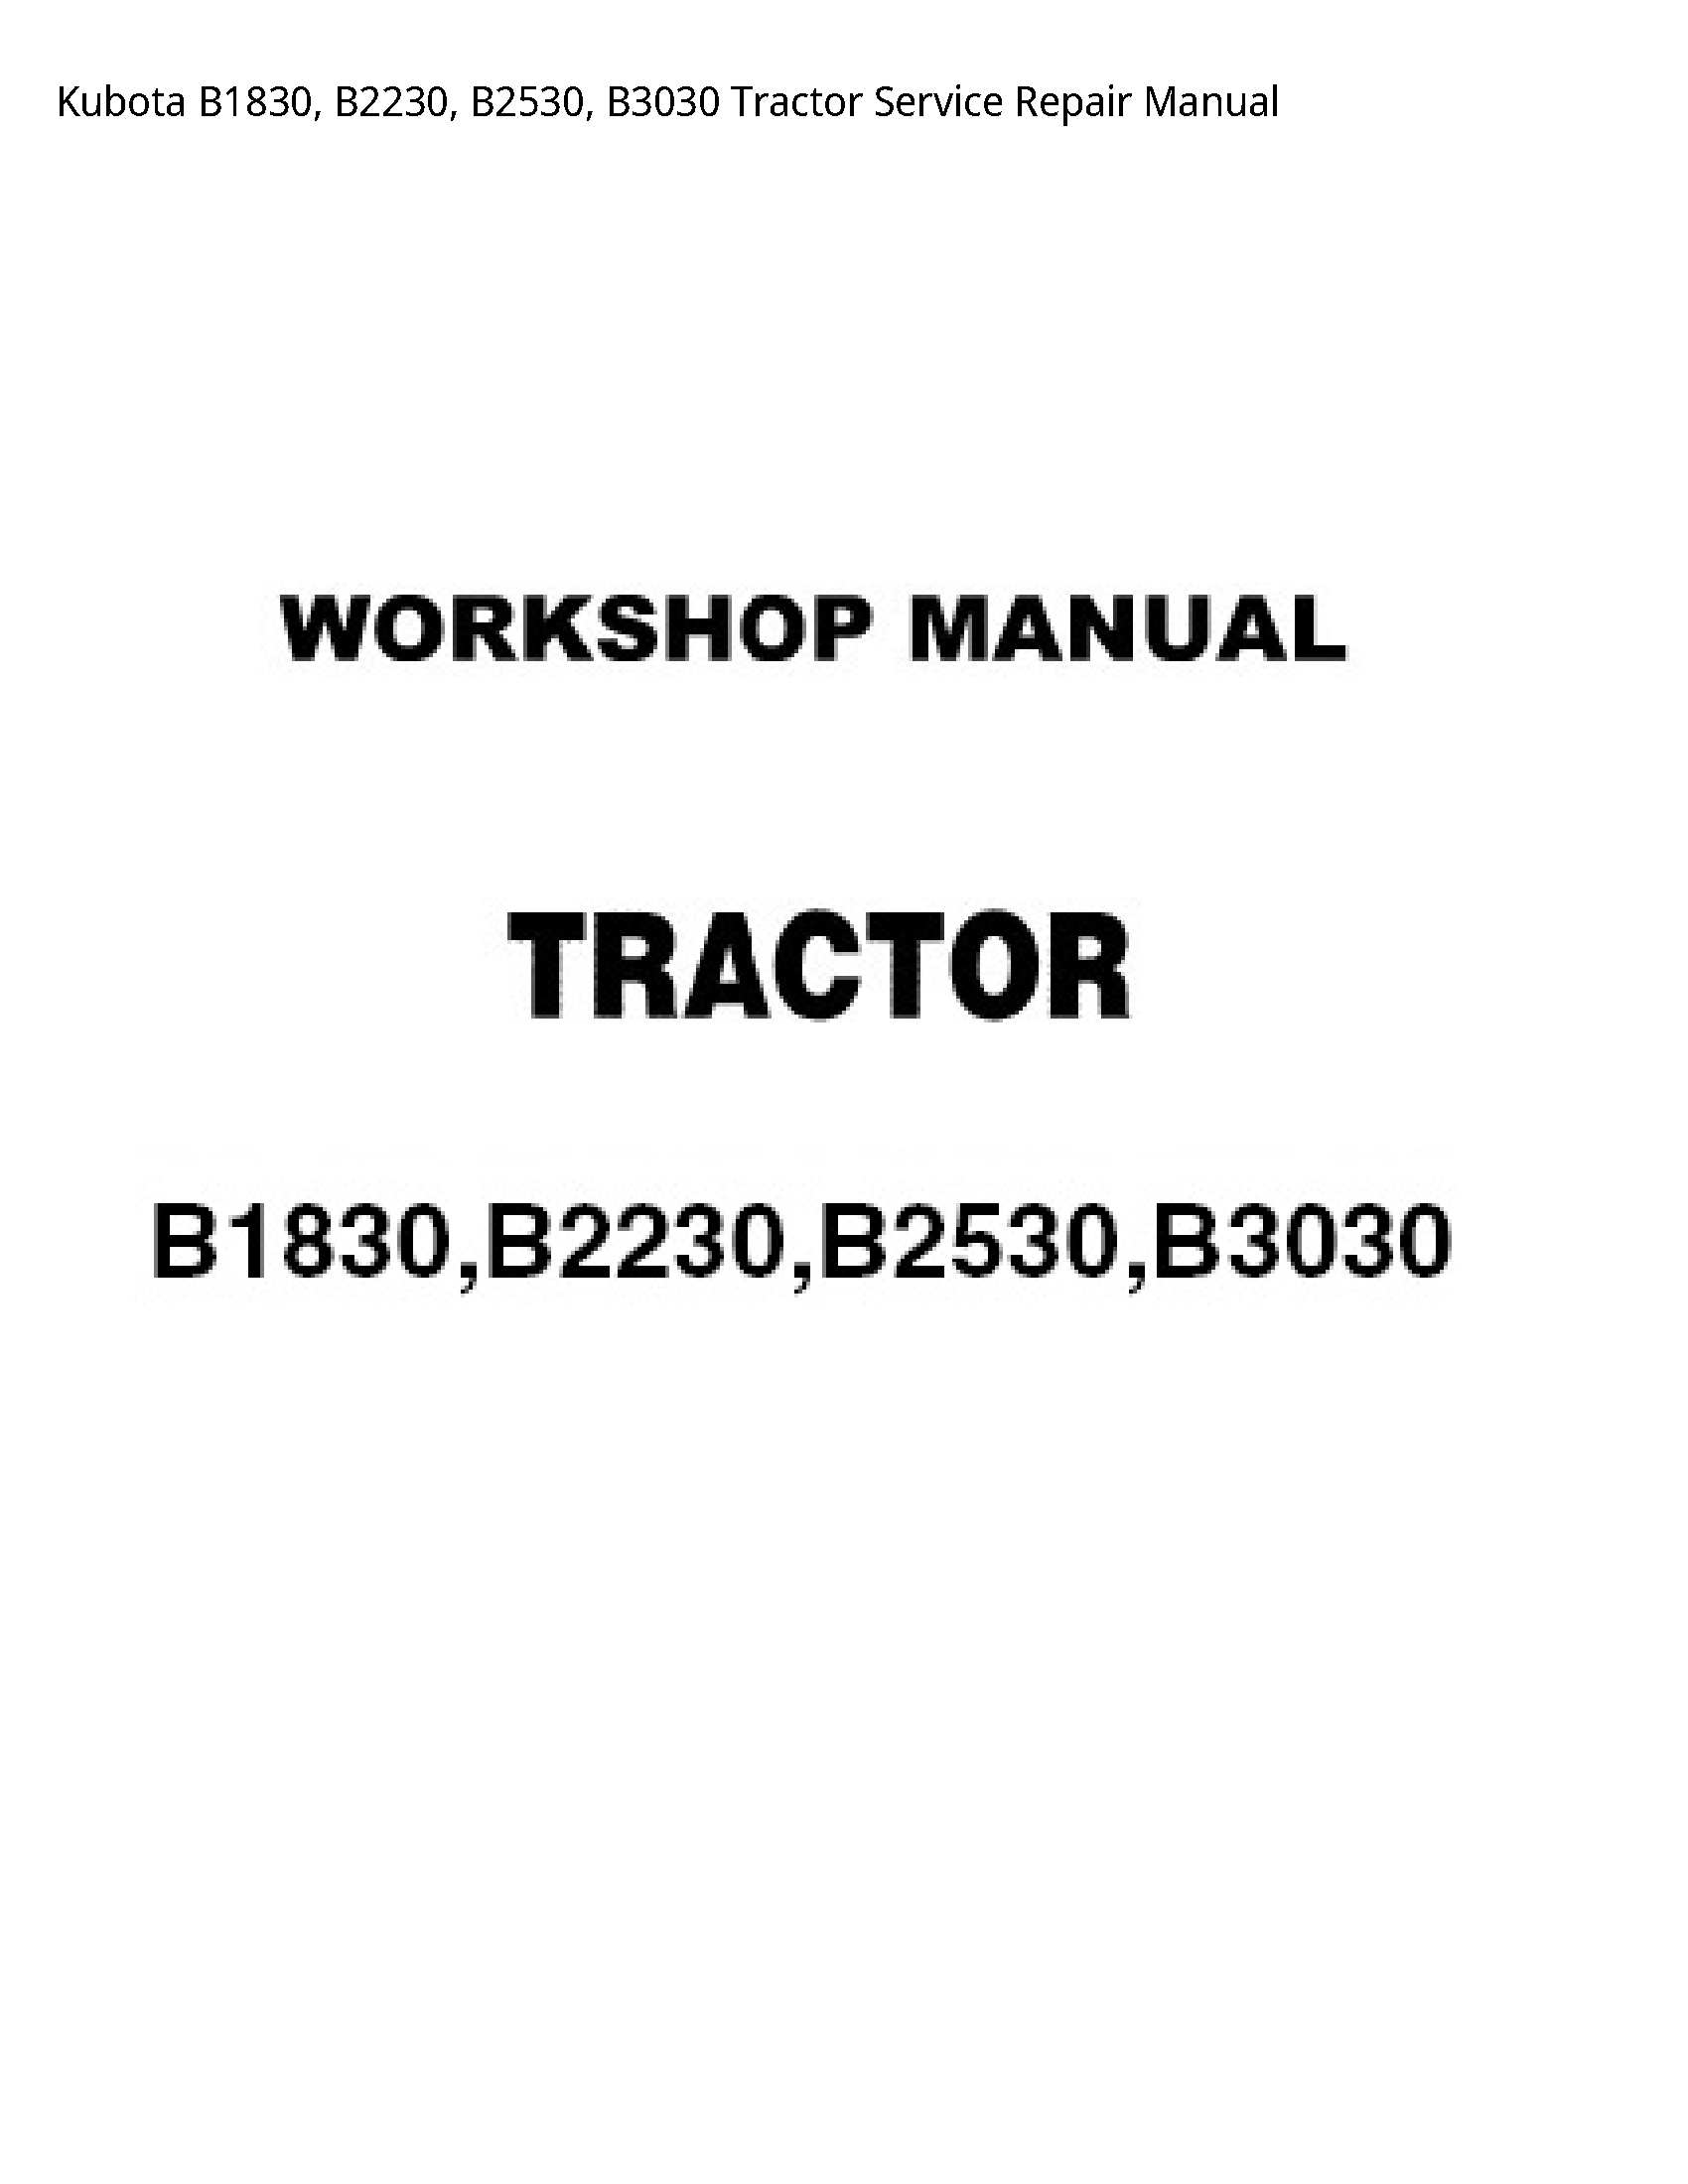 Kubota B1830 Tractor manual